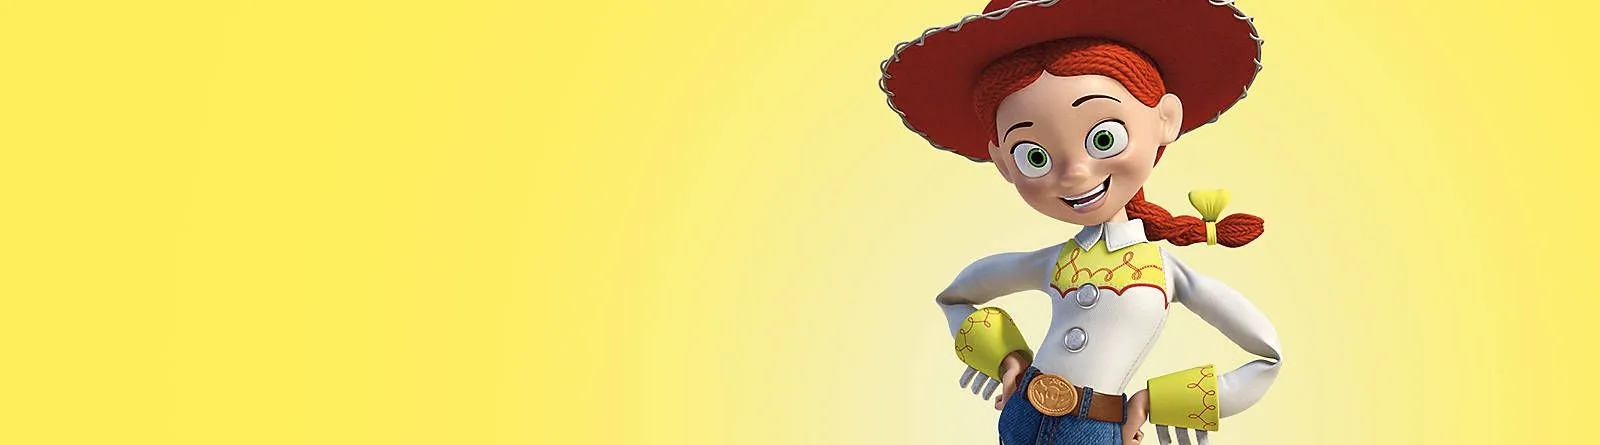 Productos de Jessie (Toy Story) - Shop Disney